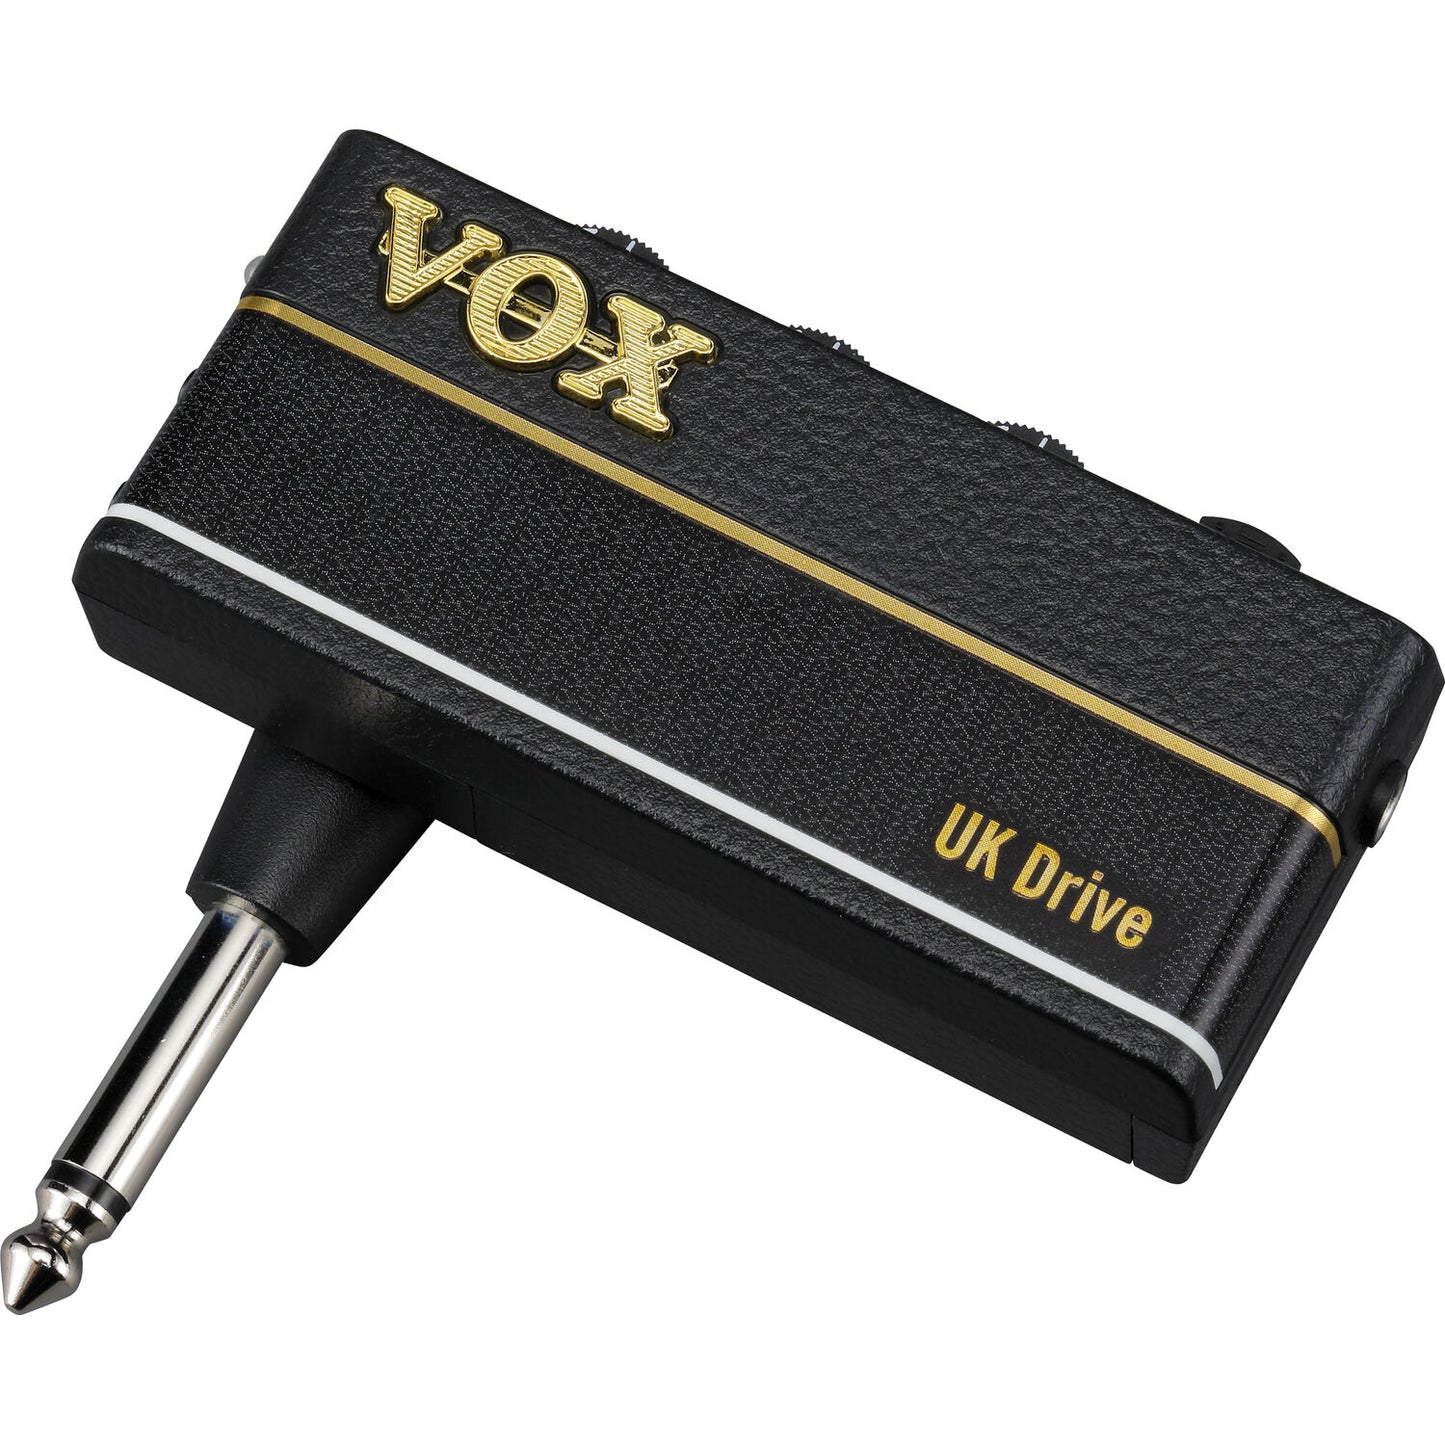 Vox AmPlug3 UK Drive Headphone Amp